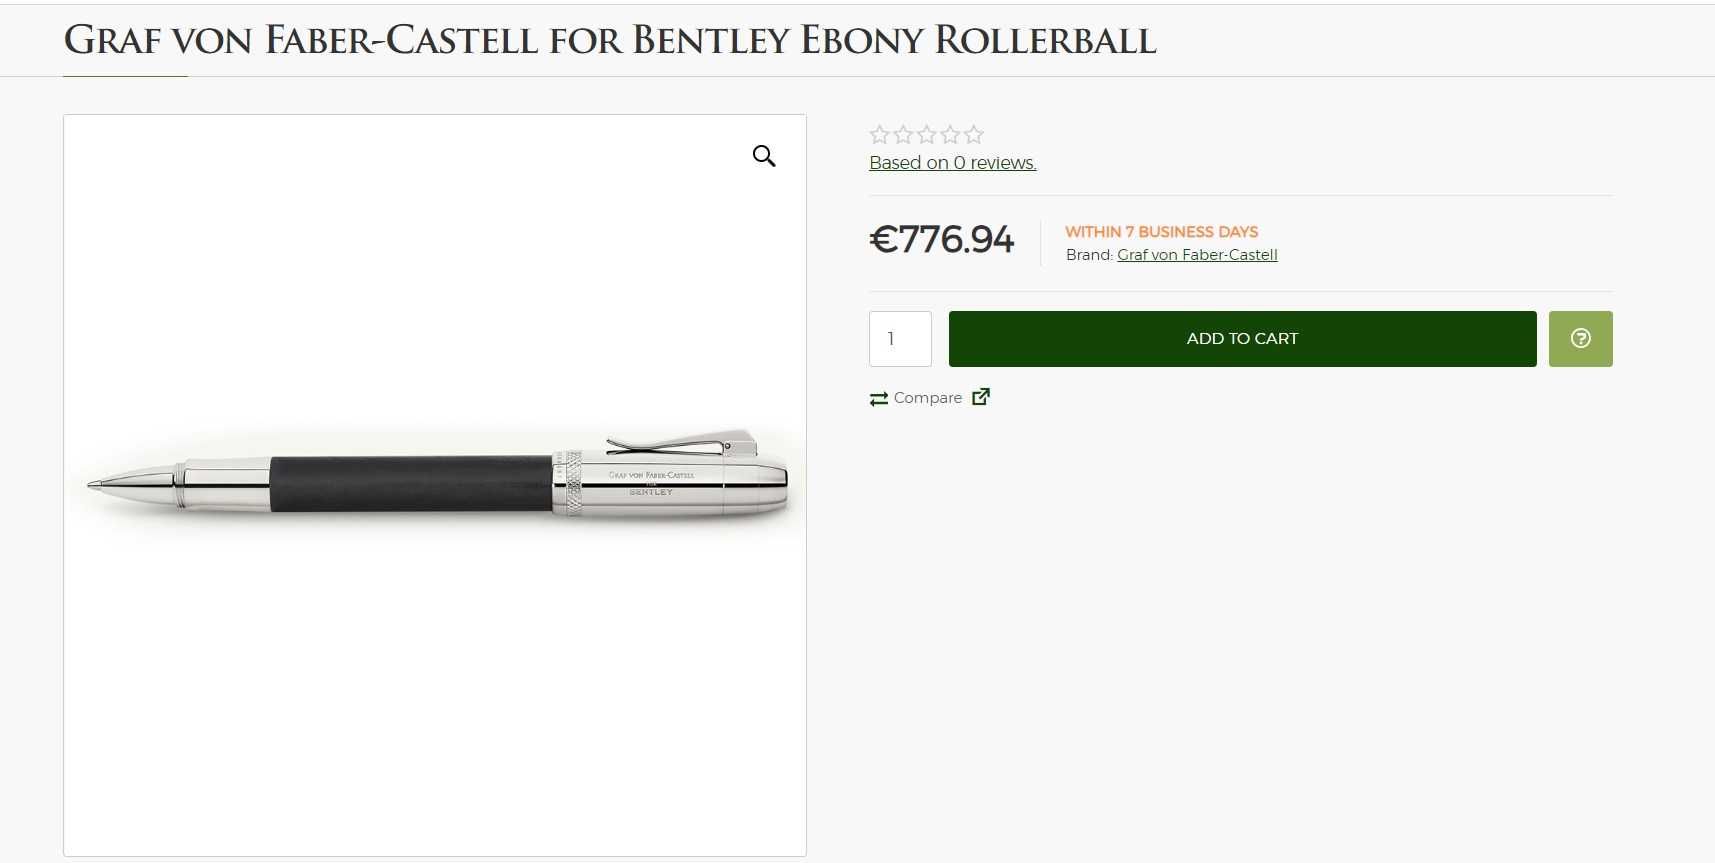 Graf von Faber-Castell for Bentley Ebony Rollerball